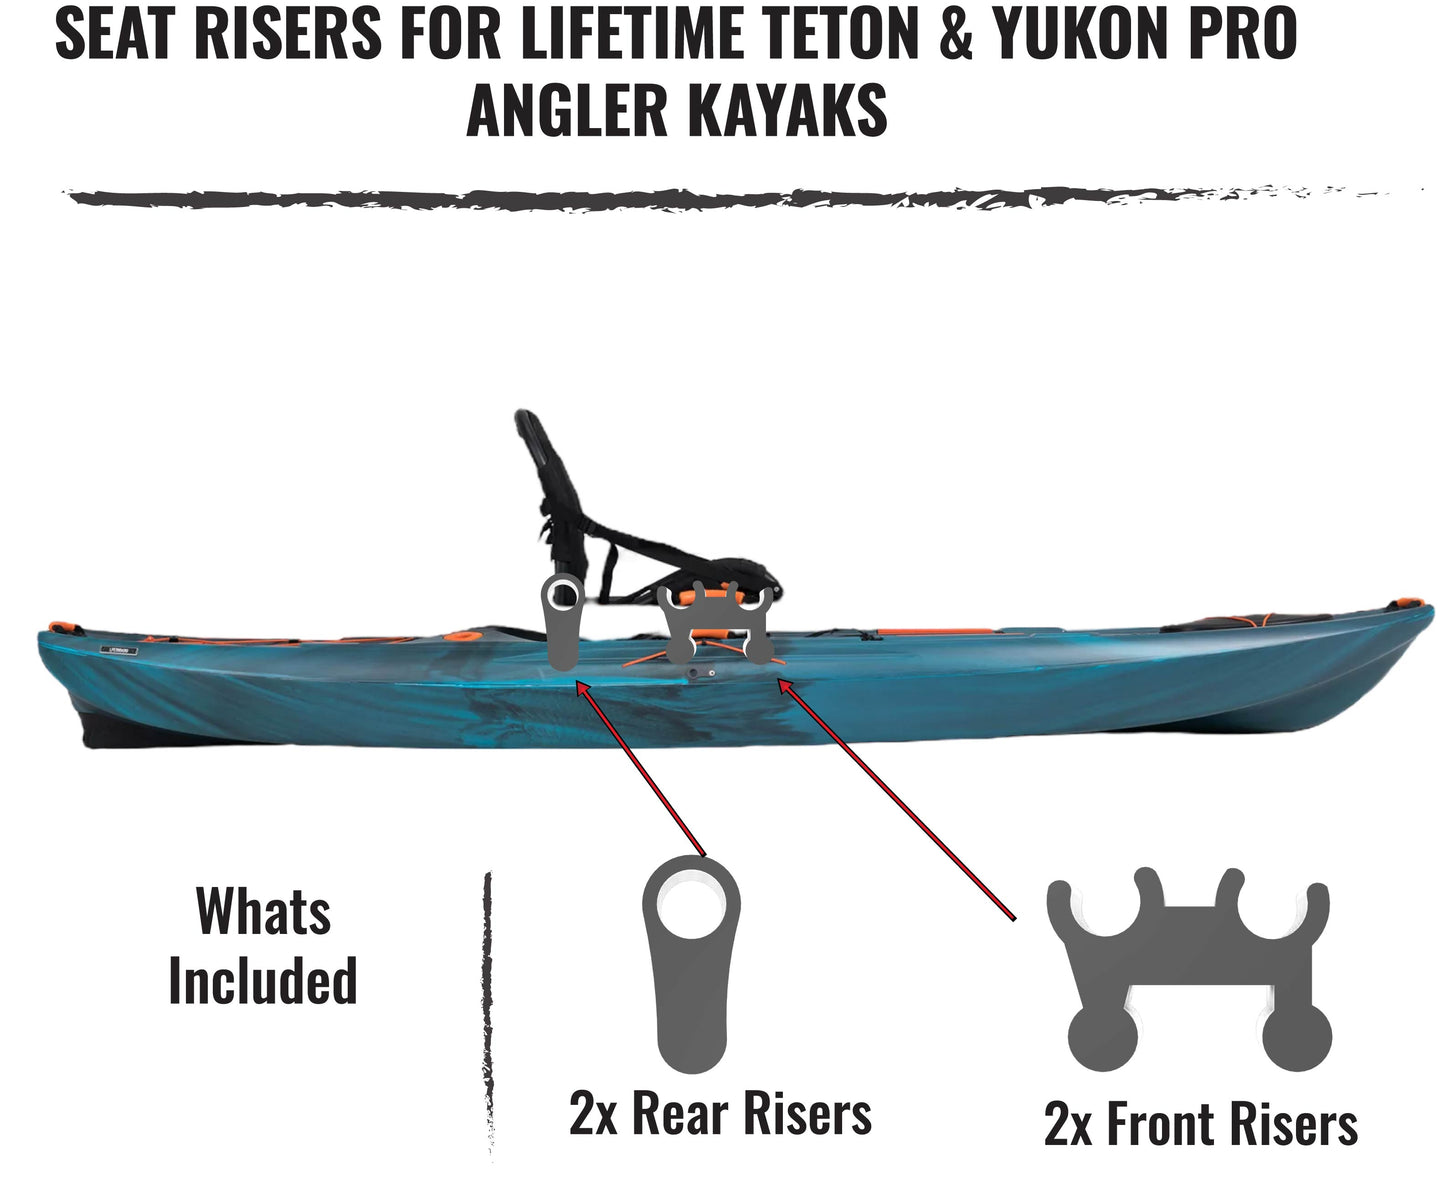 Lifetime Yukon Angler 116 & Teton Pro Kayak Seat Risers - Adjustable Height for Increased Comfort and Performance